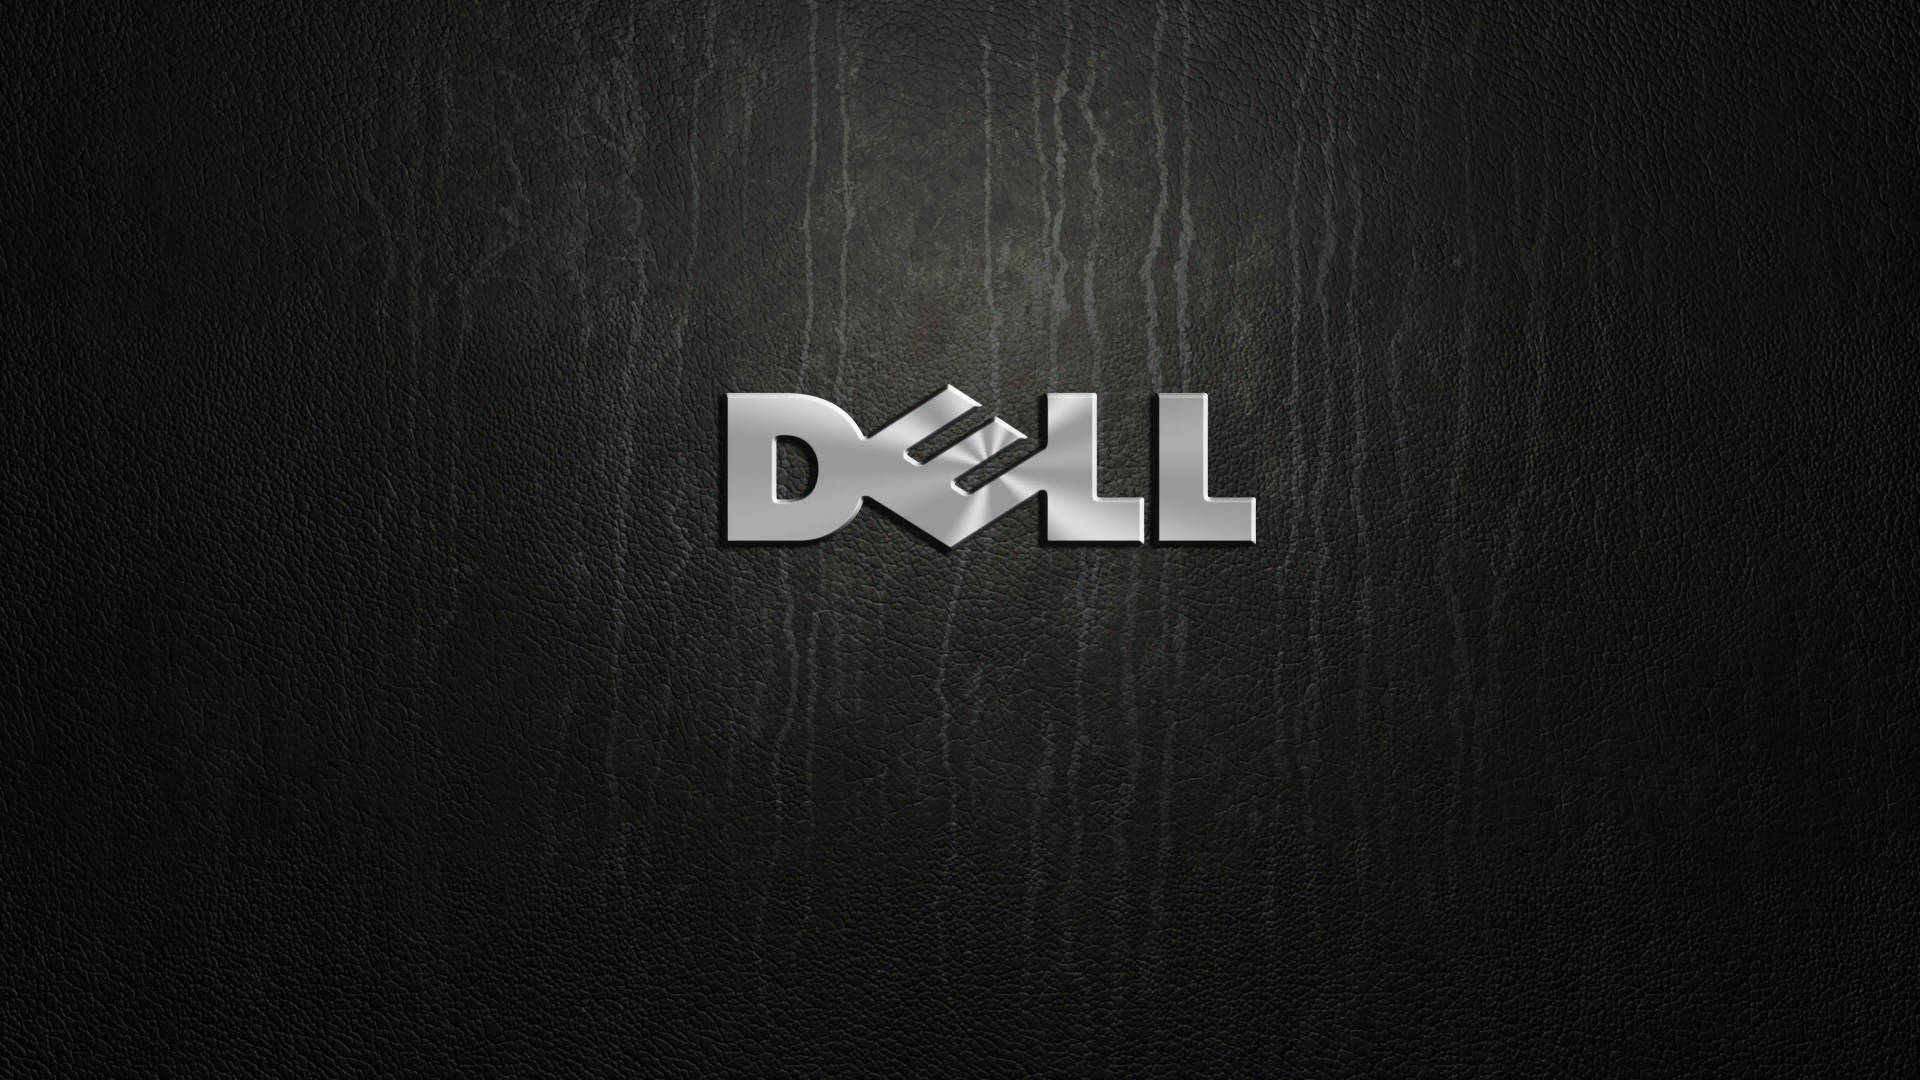 Dell 4k Logo On Wood Background